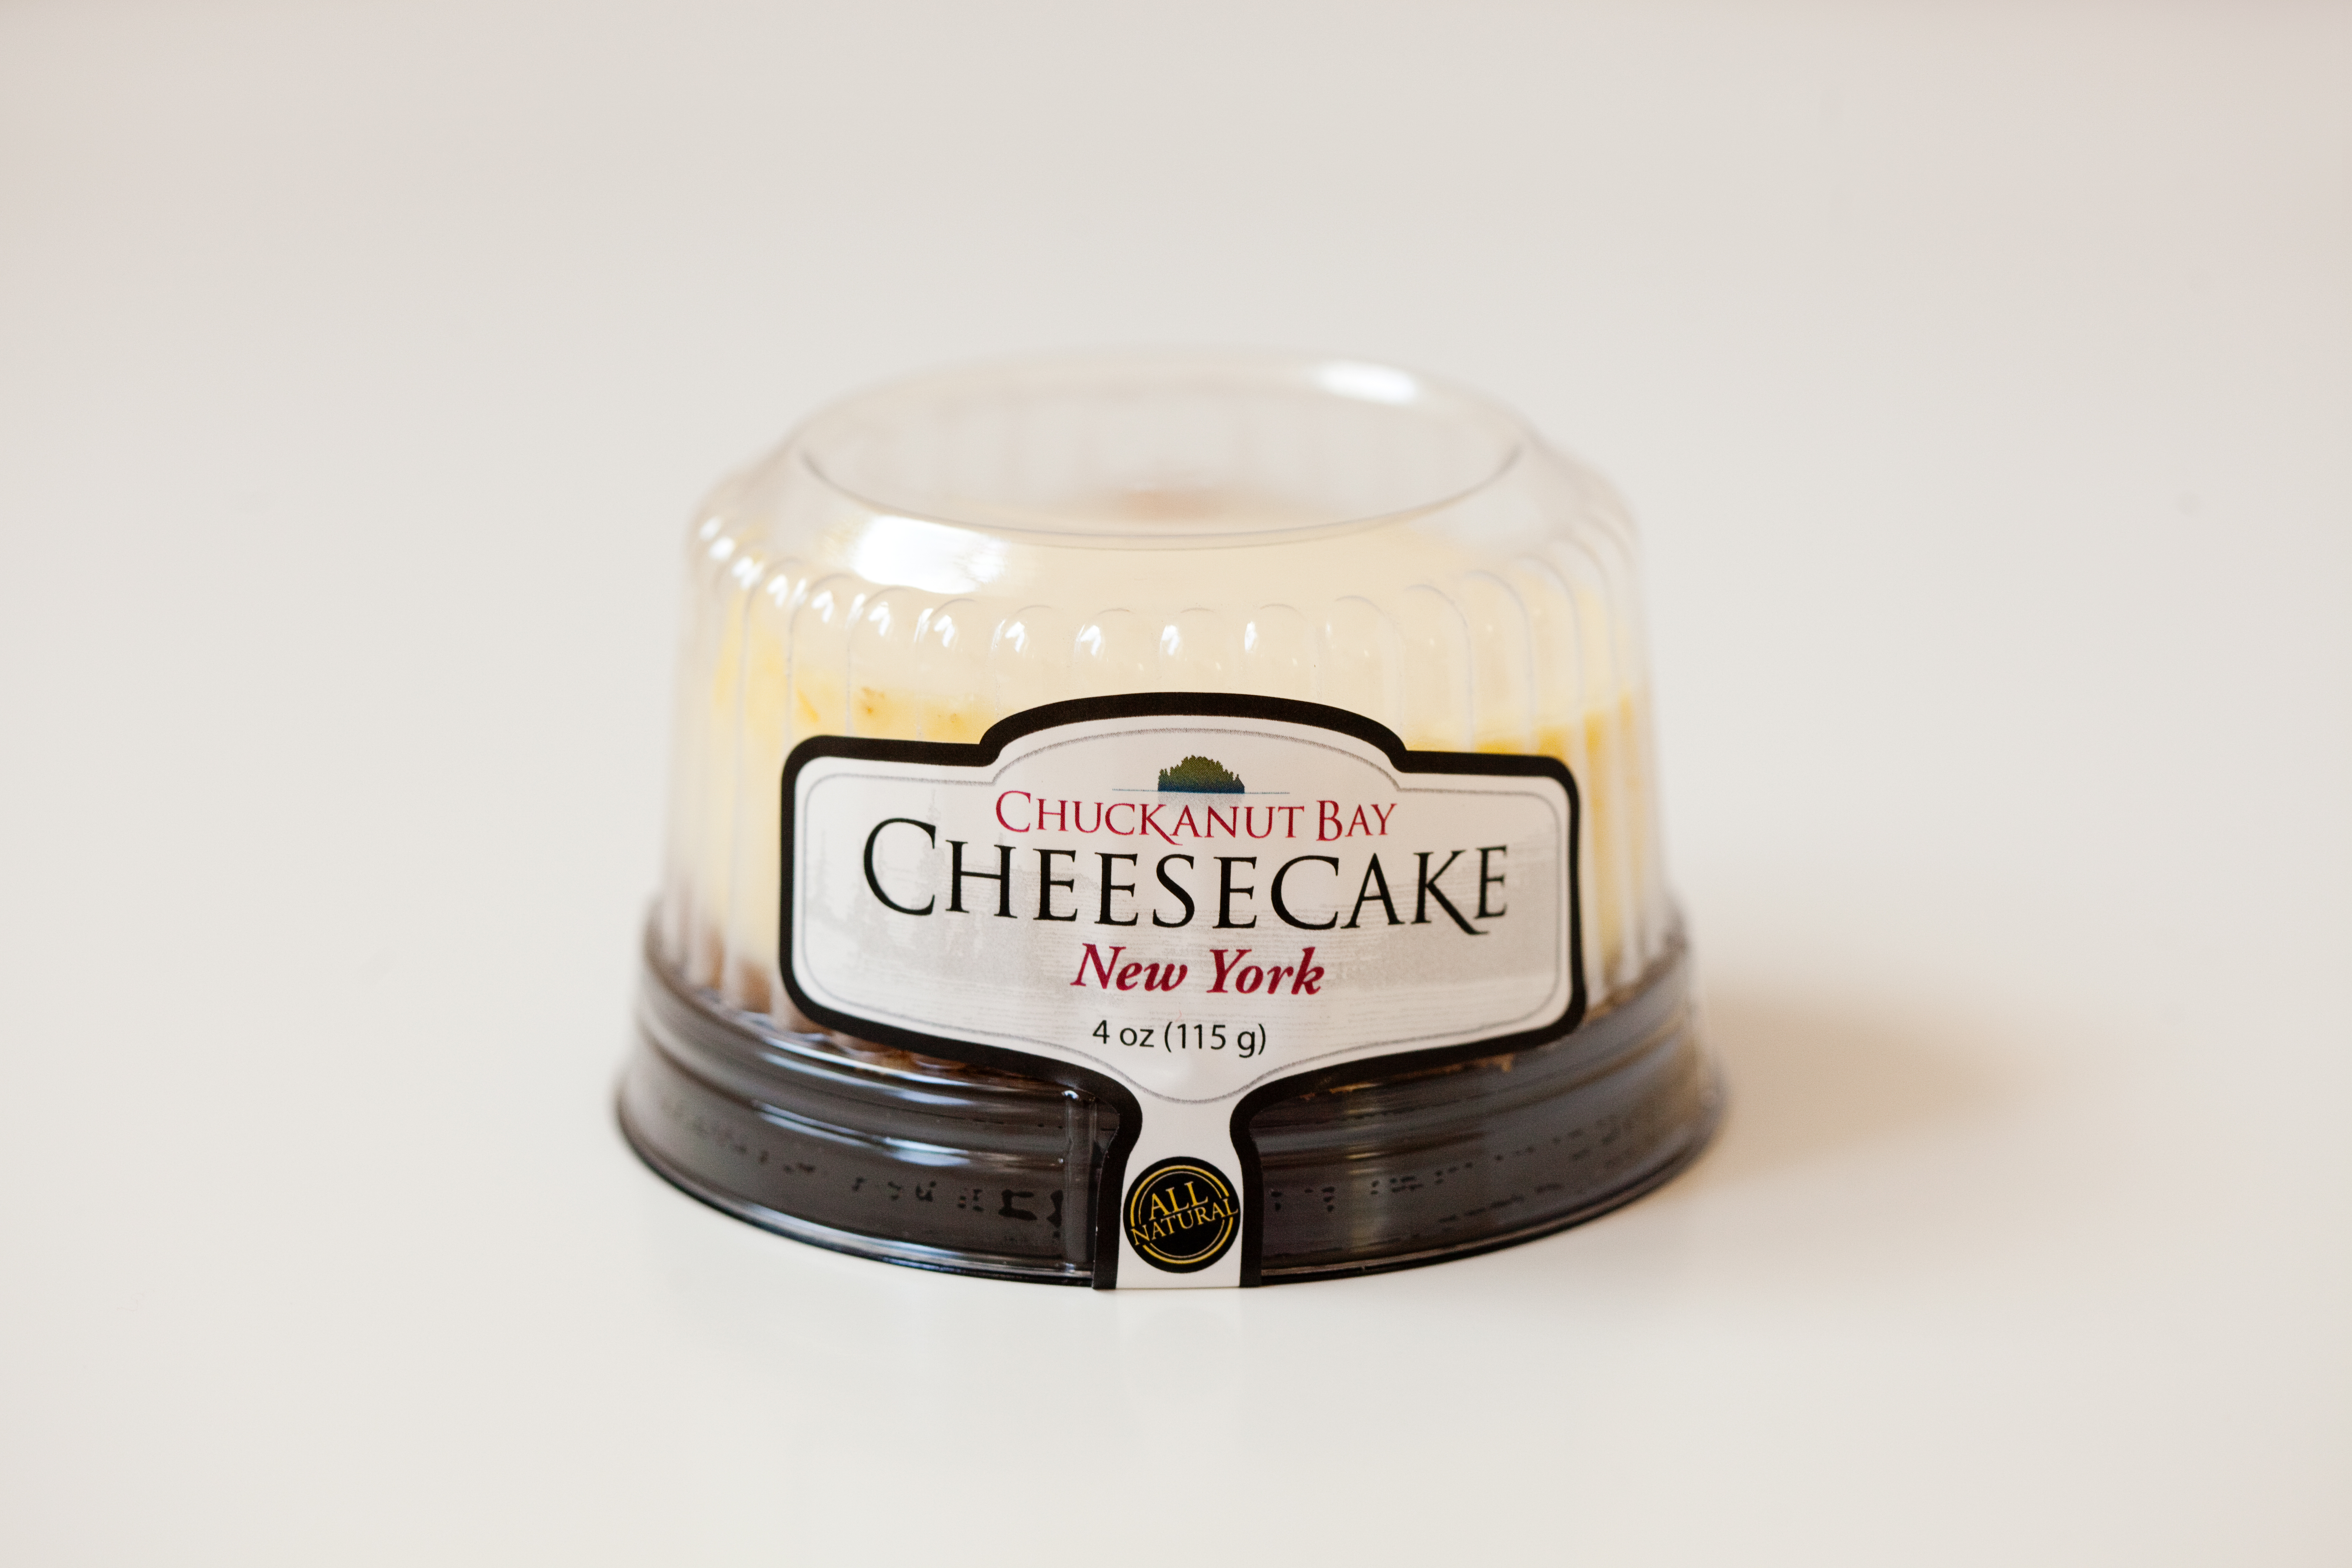 Chuckanut Bay 4 oz New York Cheesecake by Chuckanut Bay Foods